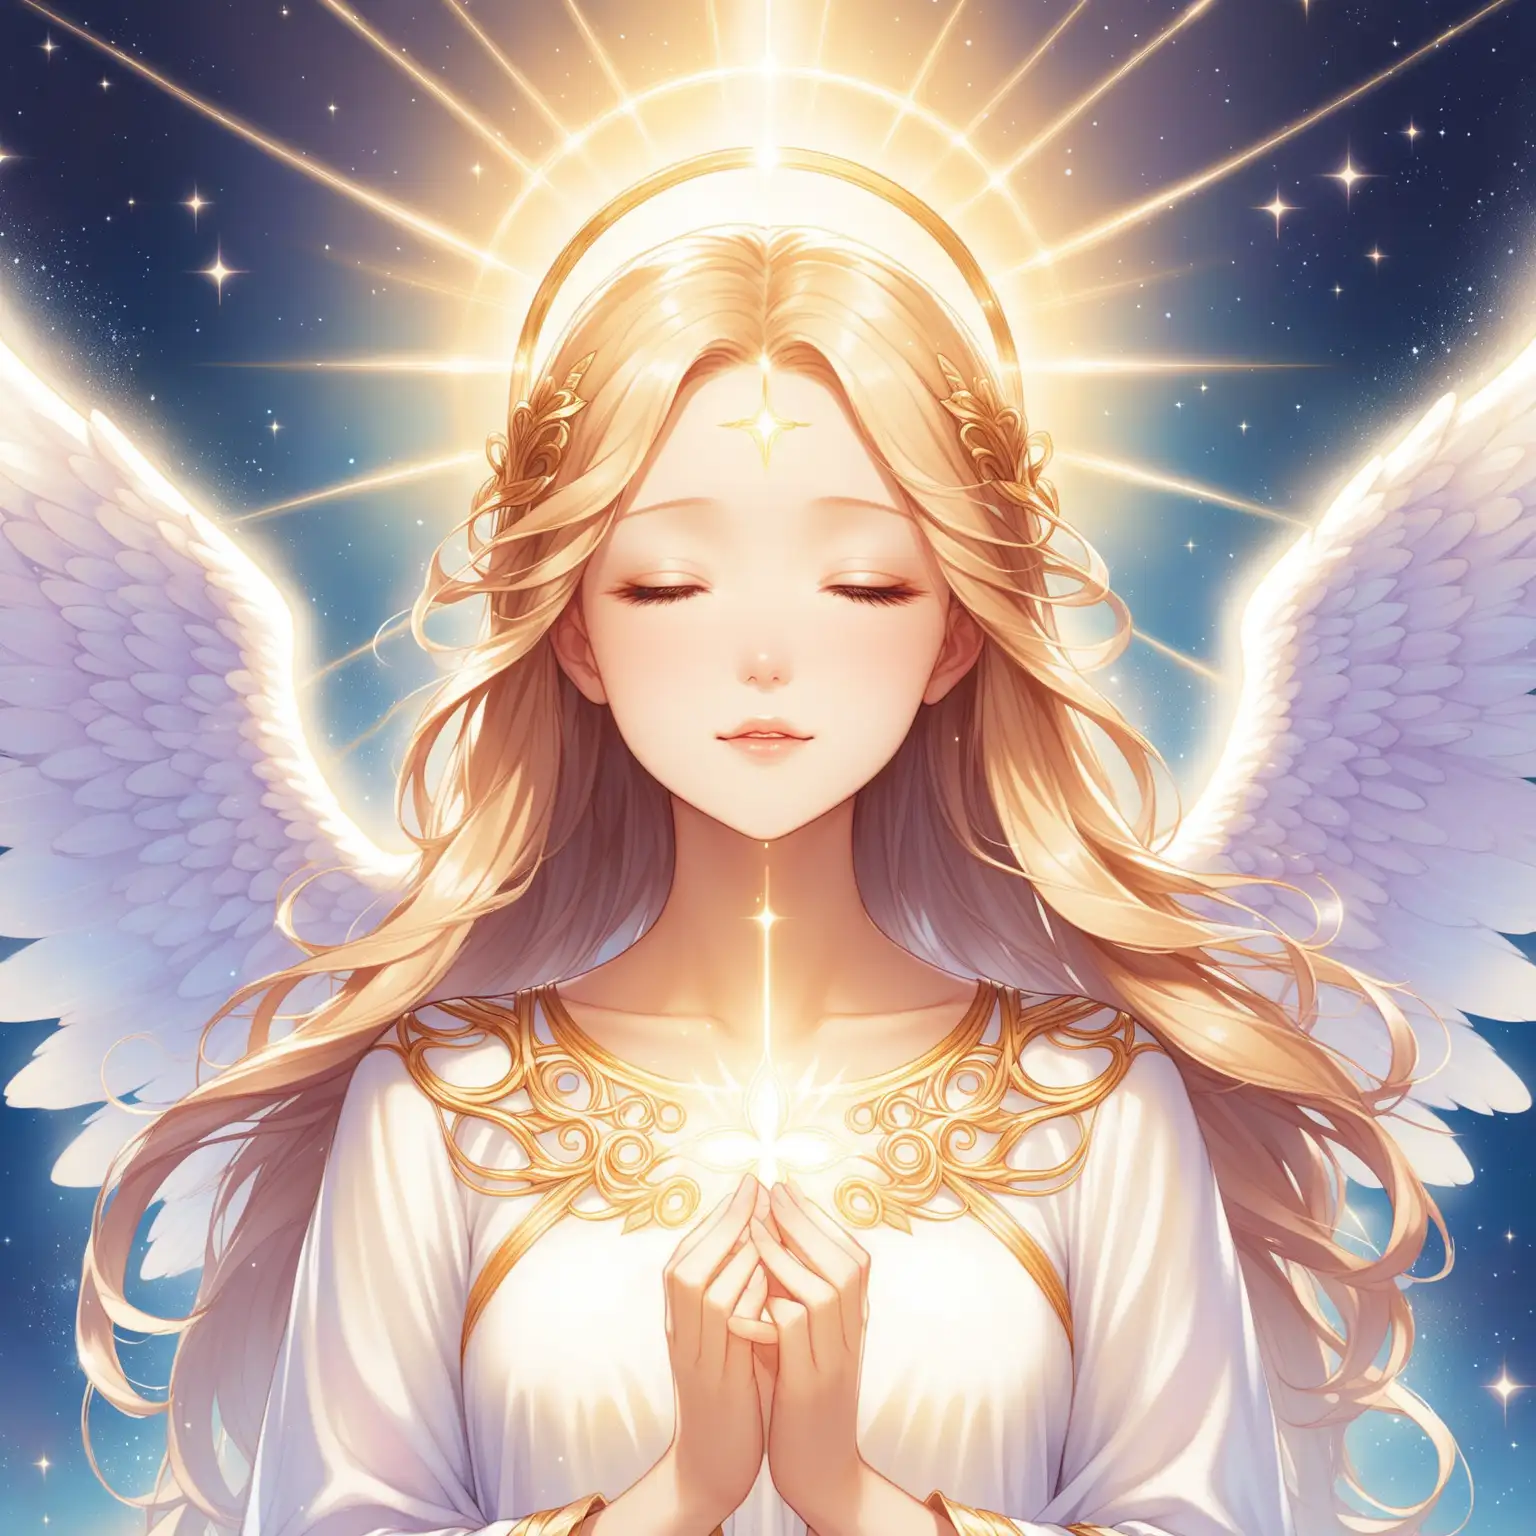 Serene Angelic Being Floating in Heavenly Glow